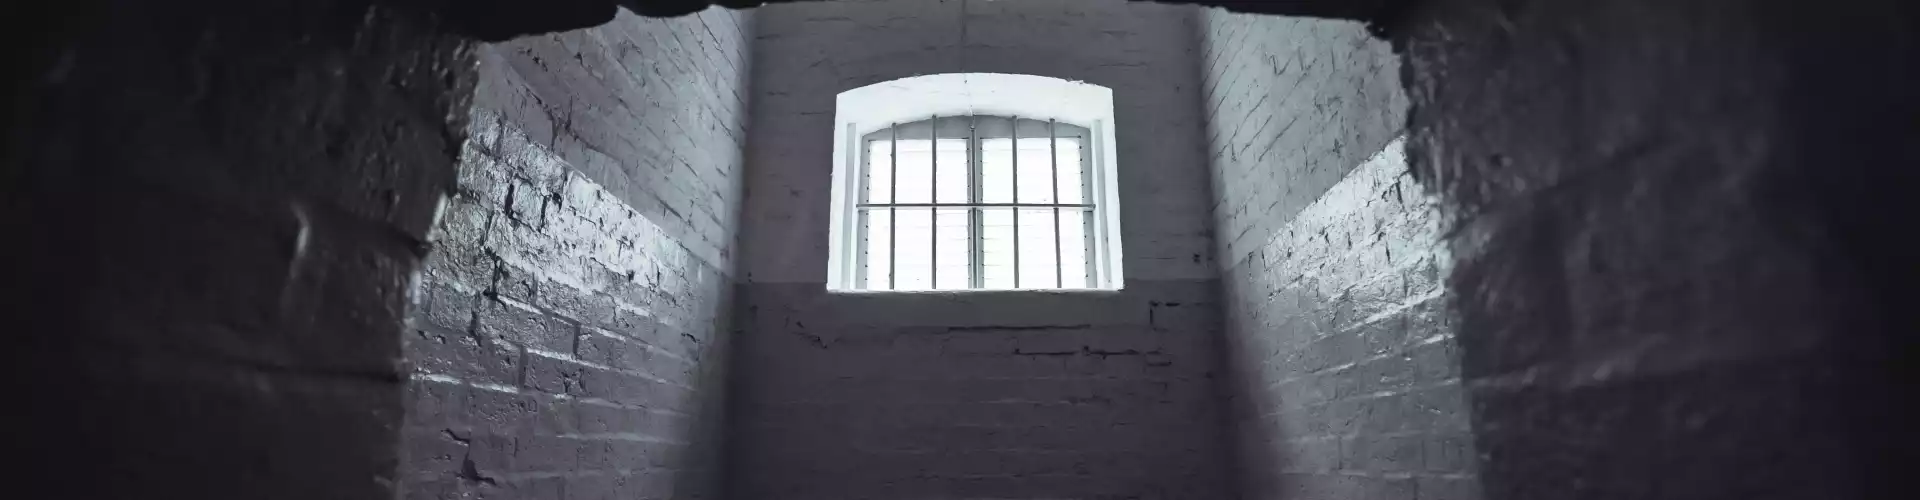 LMTV: Release the Prisoner! (Sara Jane)